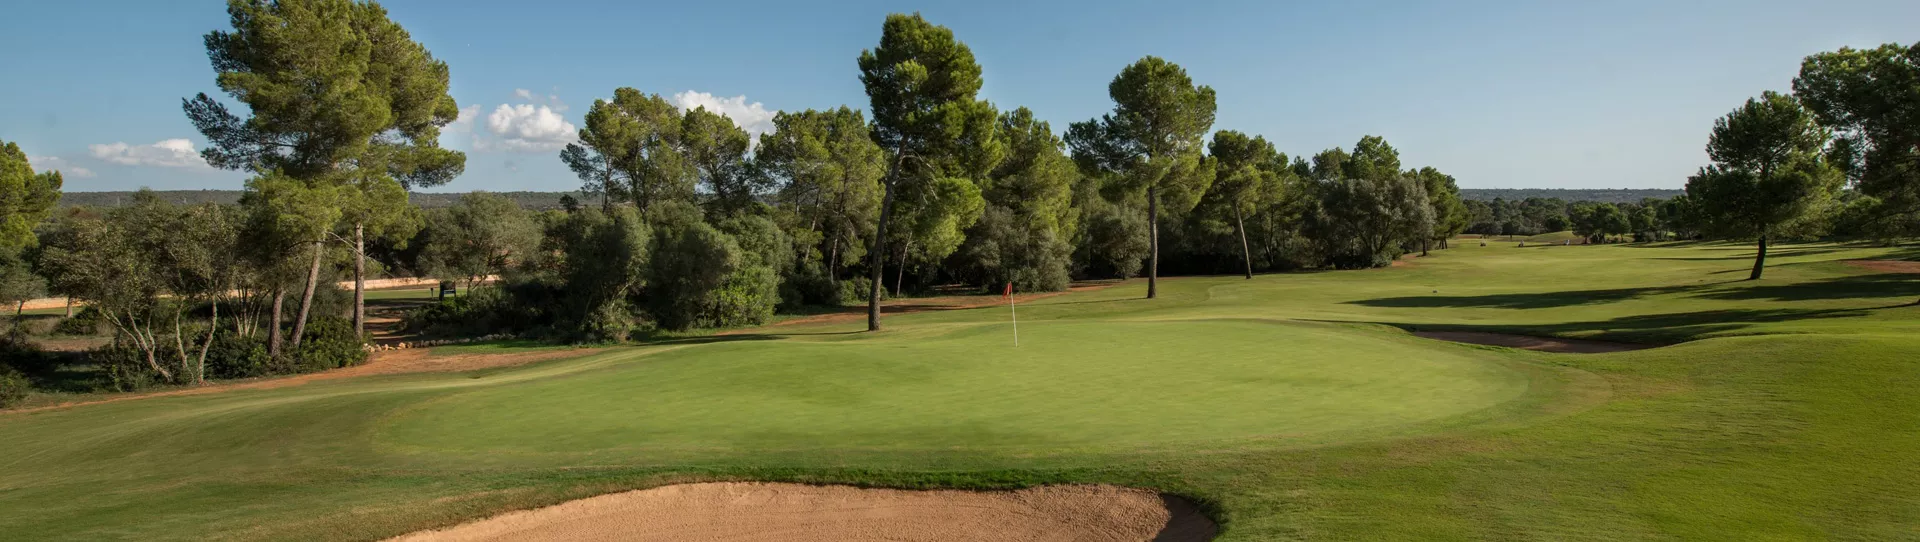 Spain golf courses - T-Golf Palma Puntiro (Ex Mallorca Park Puntiro) - Photo 1